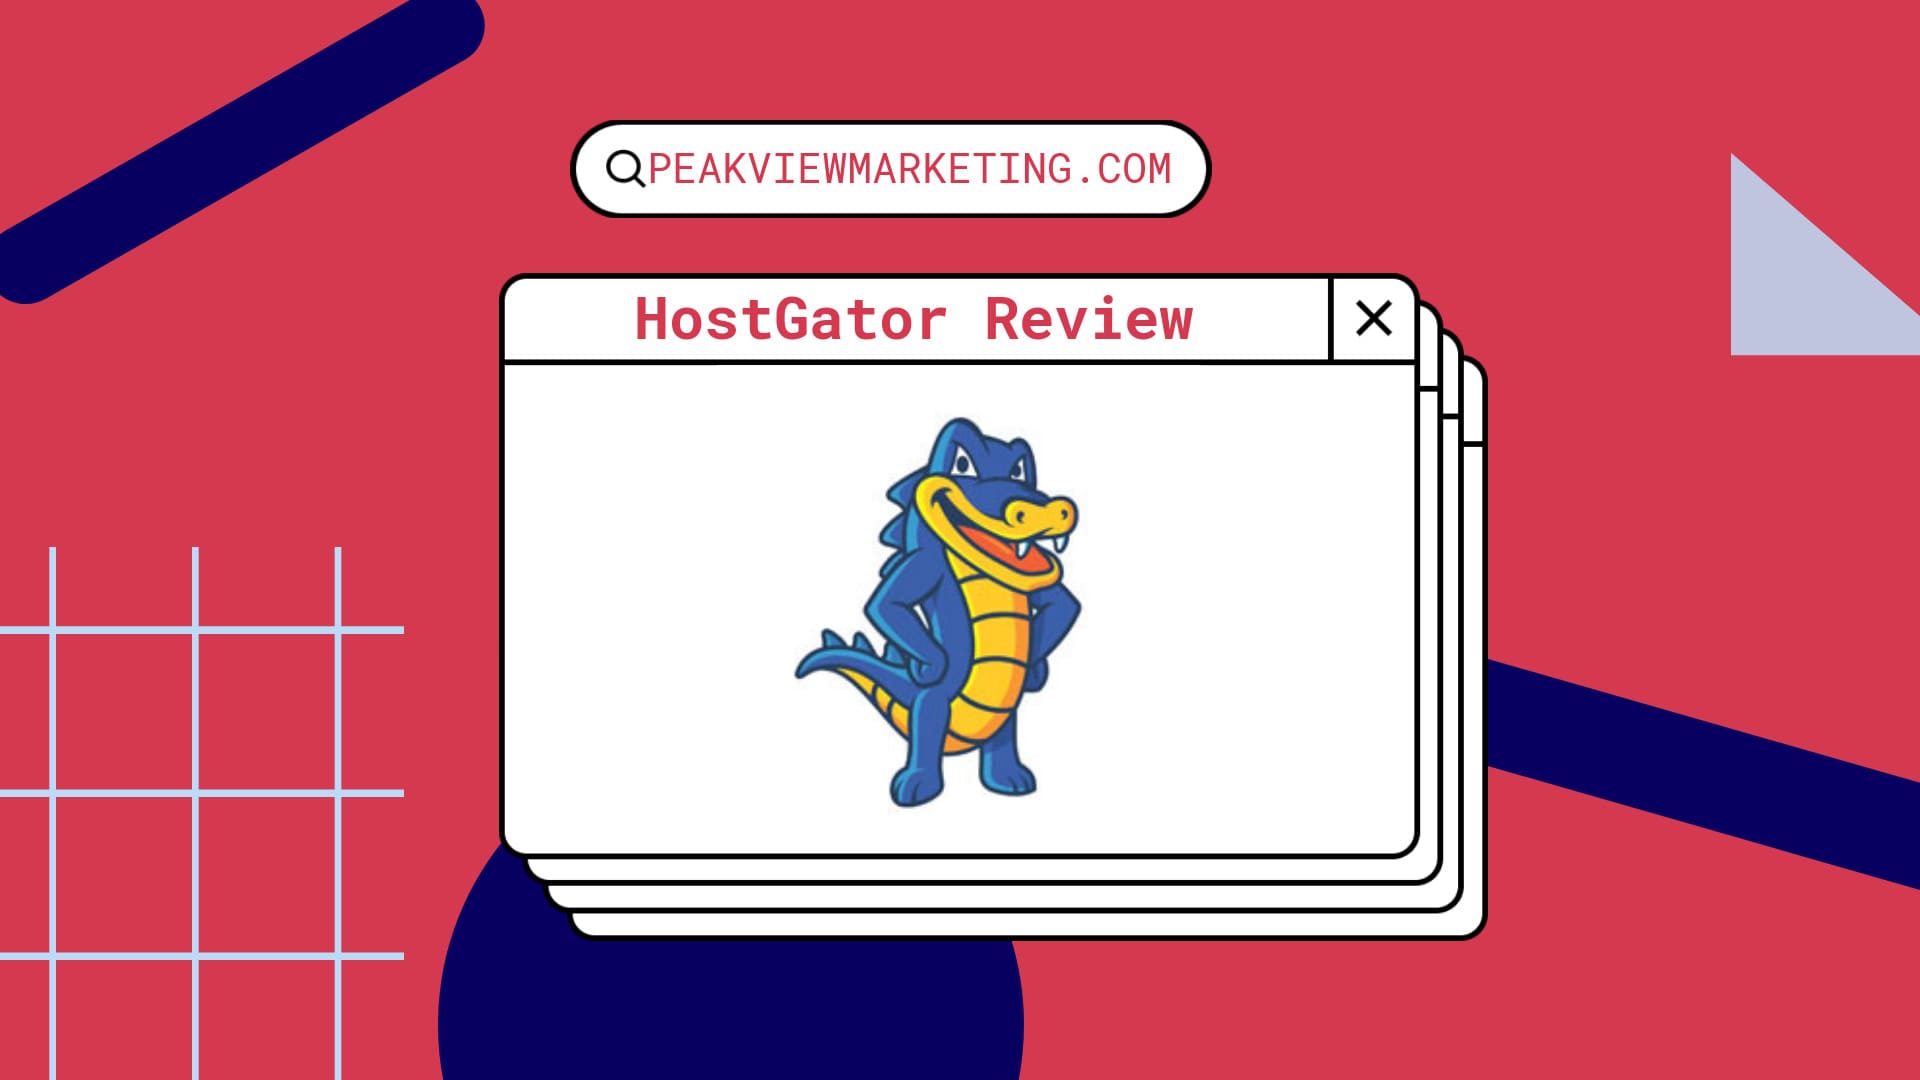 Hostgator Review Image